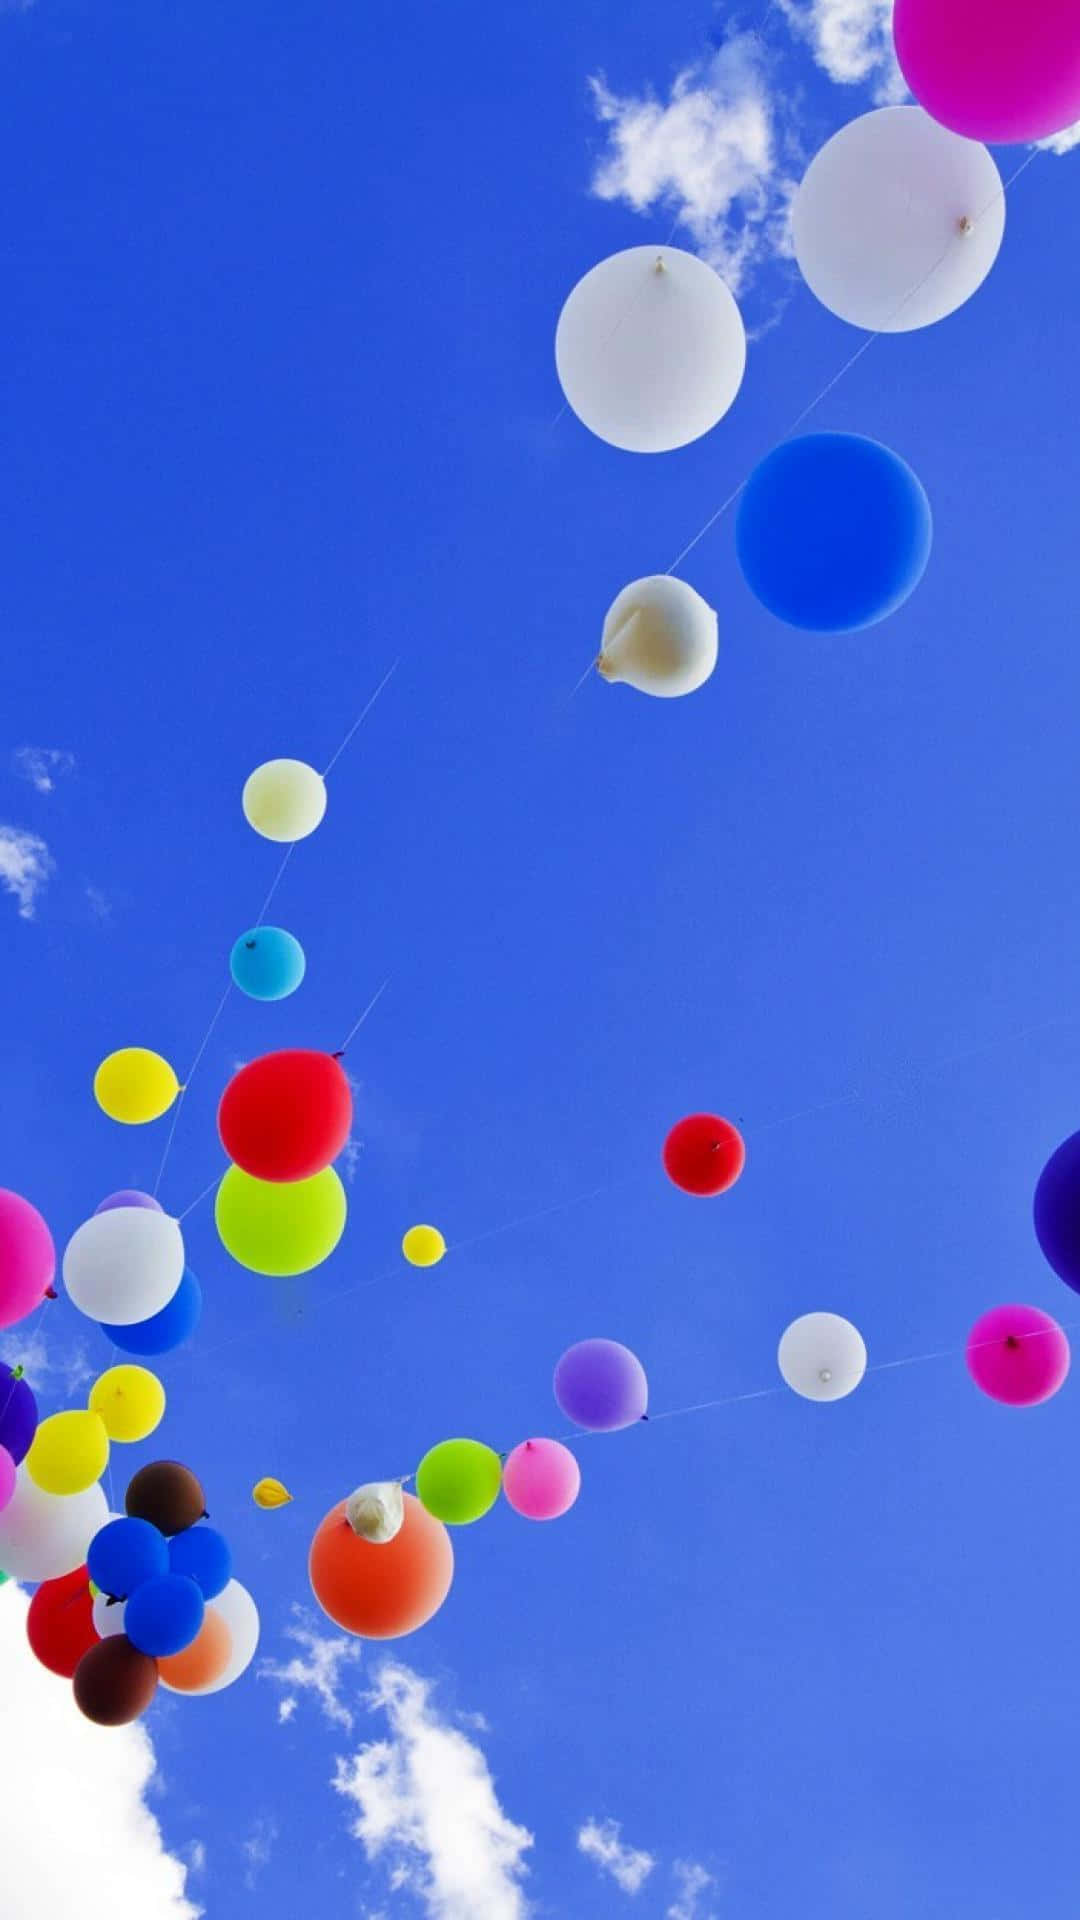 Farverigeballoner Flyvende På Himlen